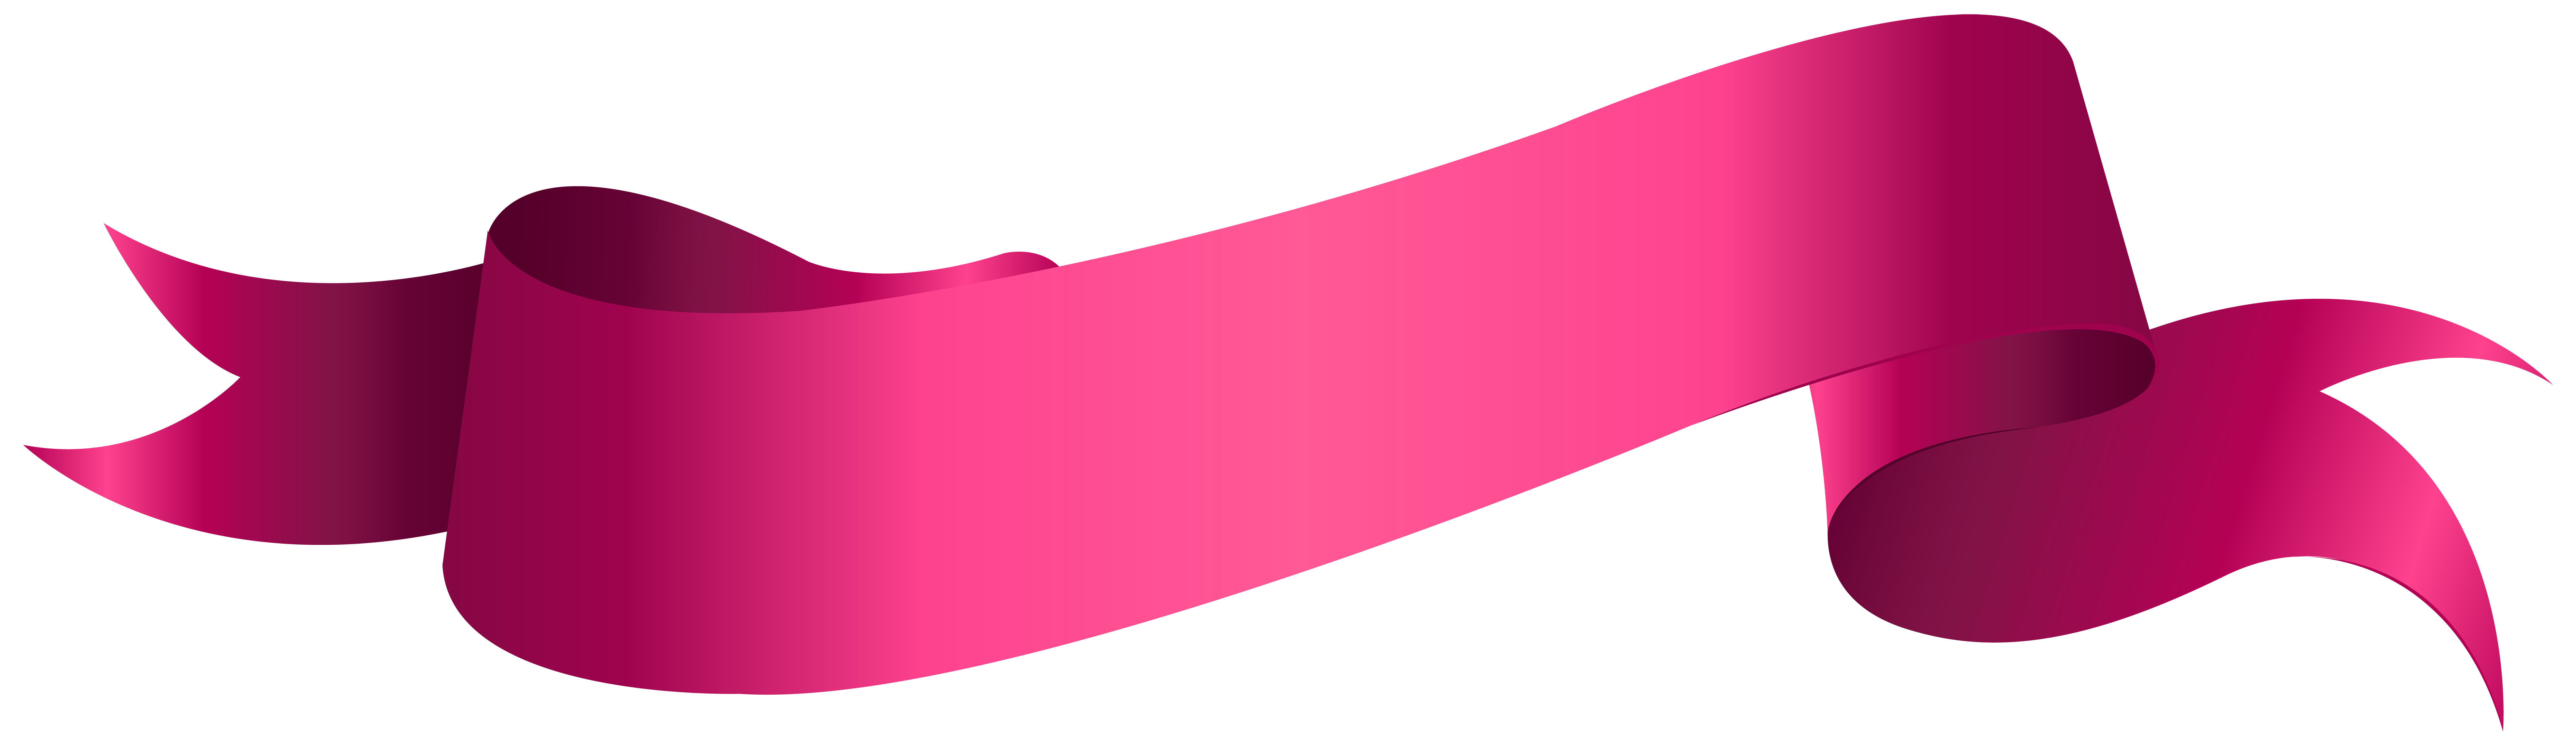 Ribbon Clipart, Banner PNG, Pink Ribbons Clip art, Digital Download